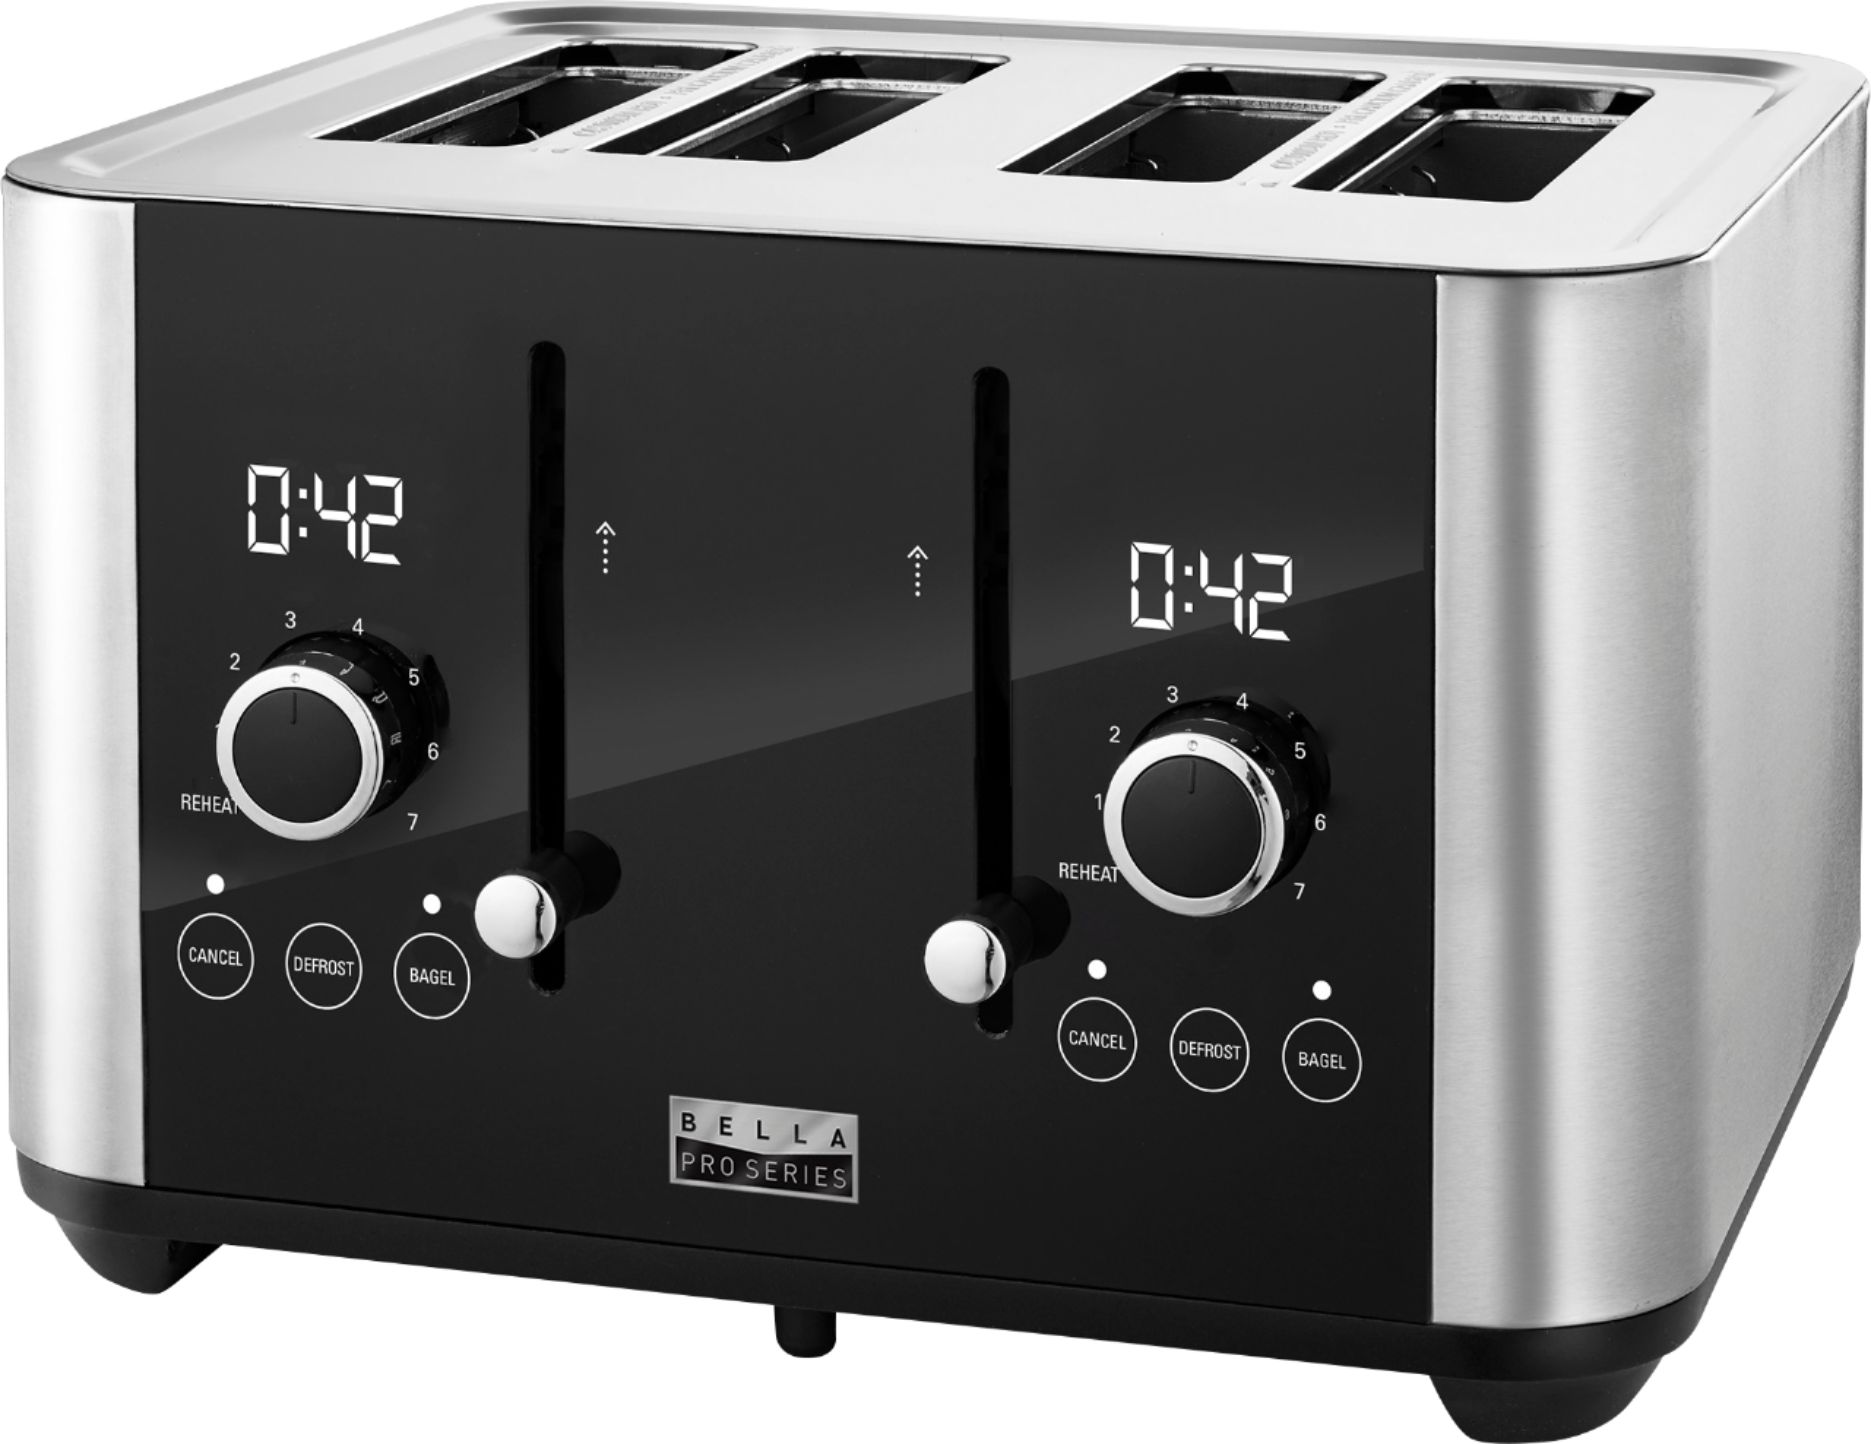  4 Slice Digital Toaster Stainless Steel: Home & Kitchen